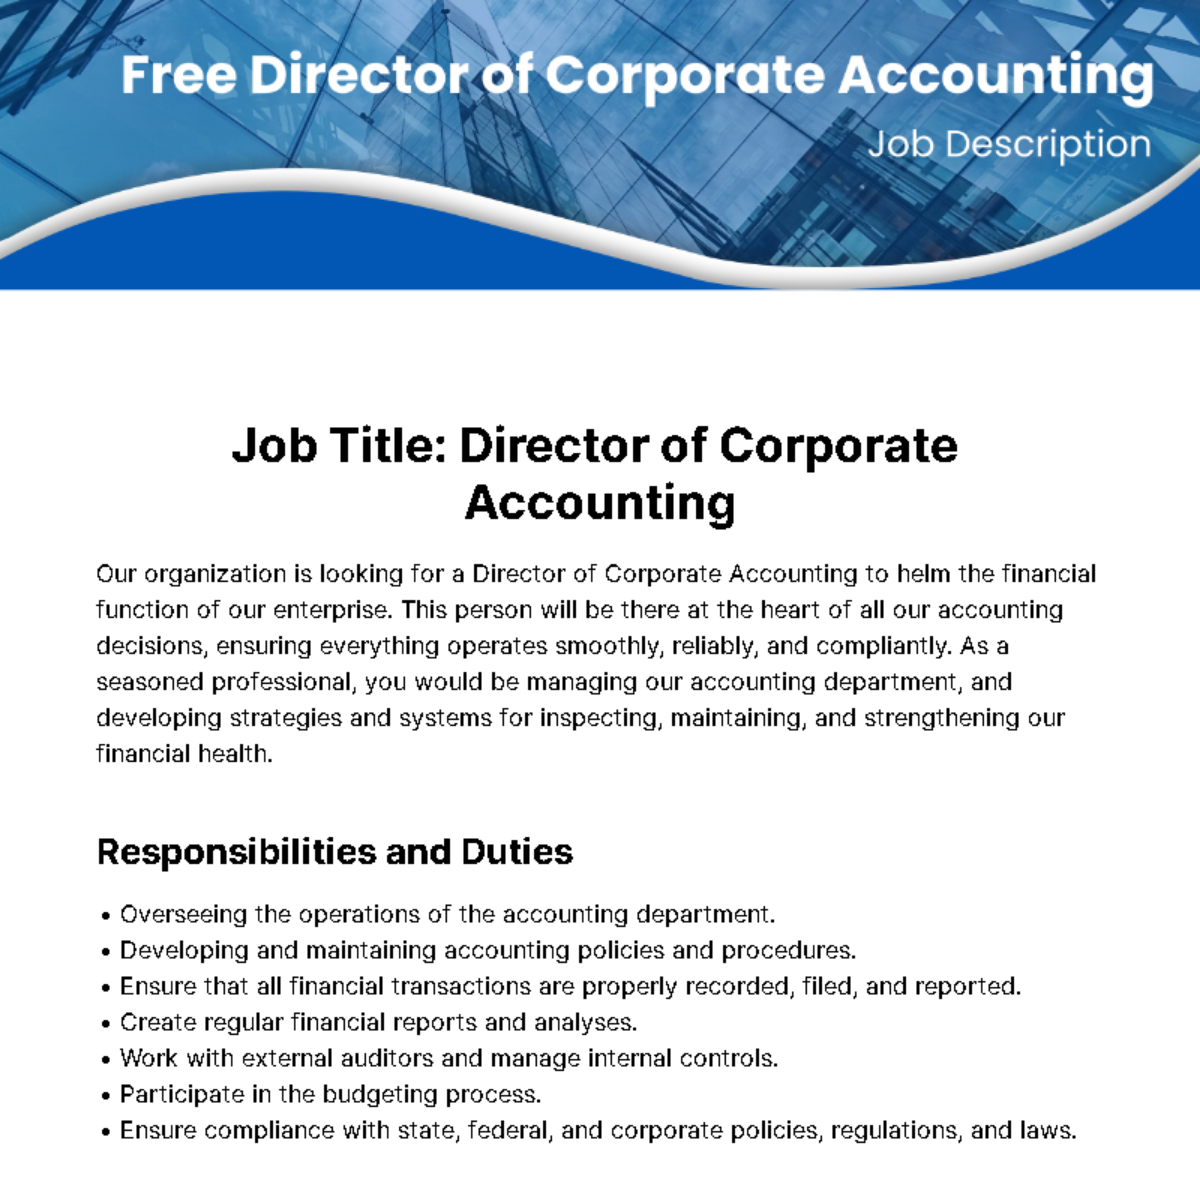 Director of Corporate Accounting Job Description Template